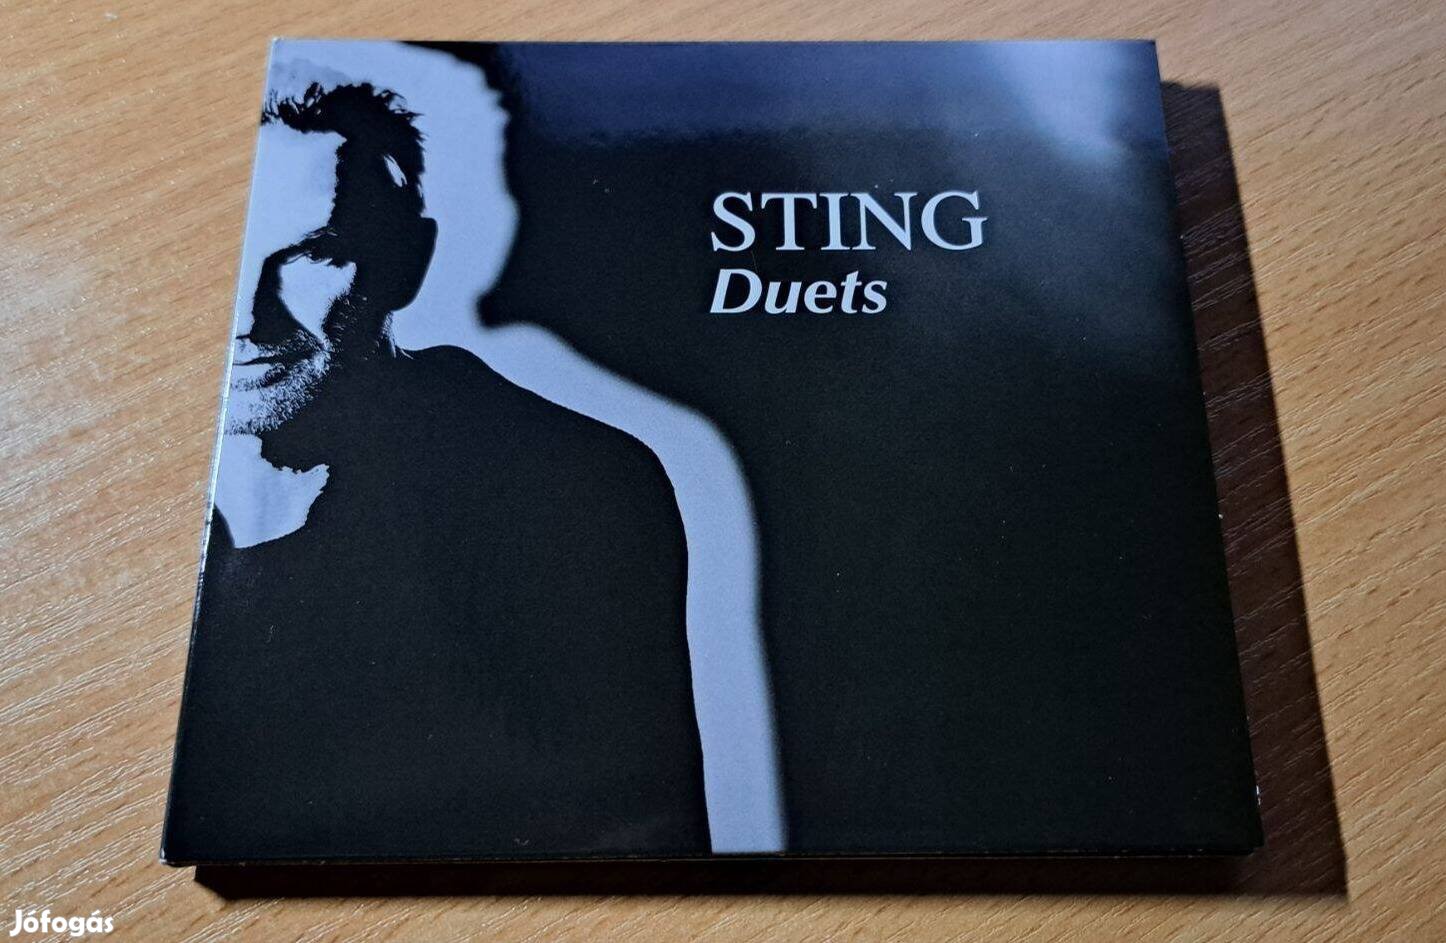 Sting - Duets - CD